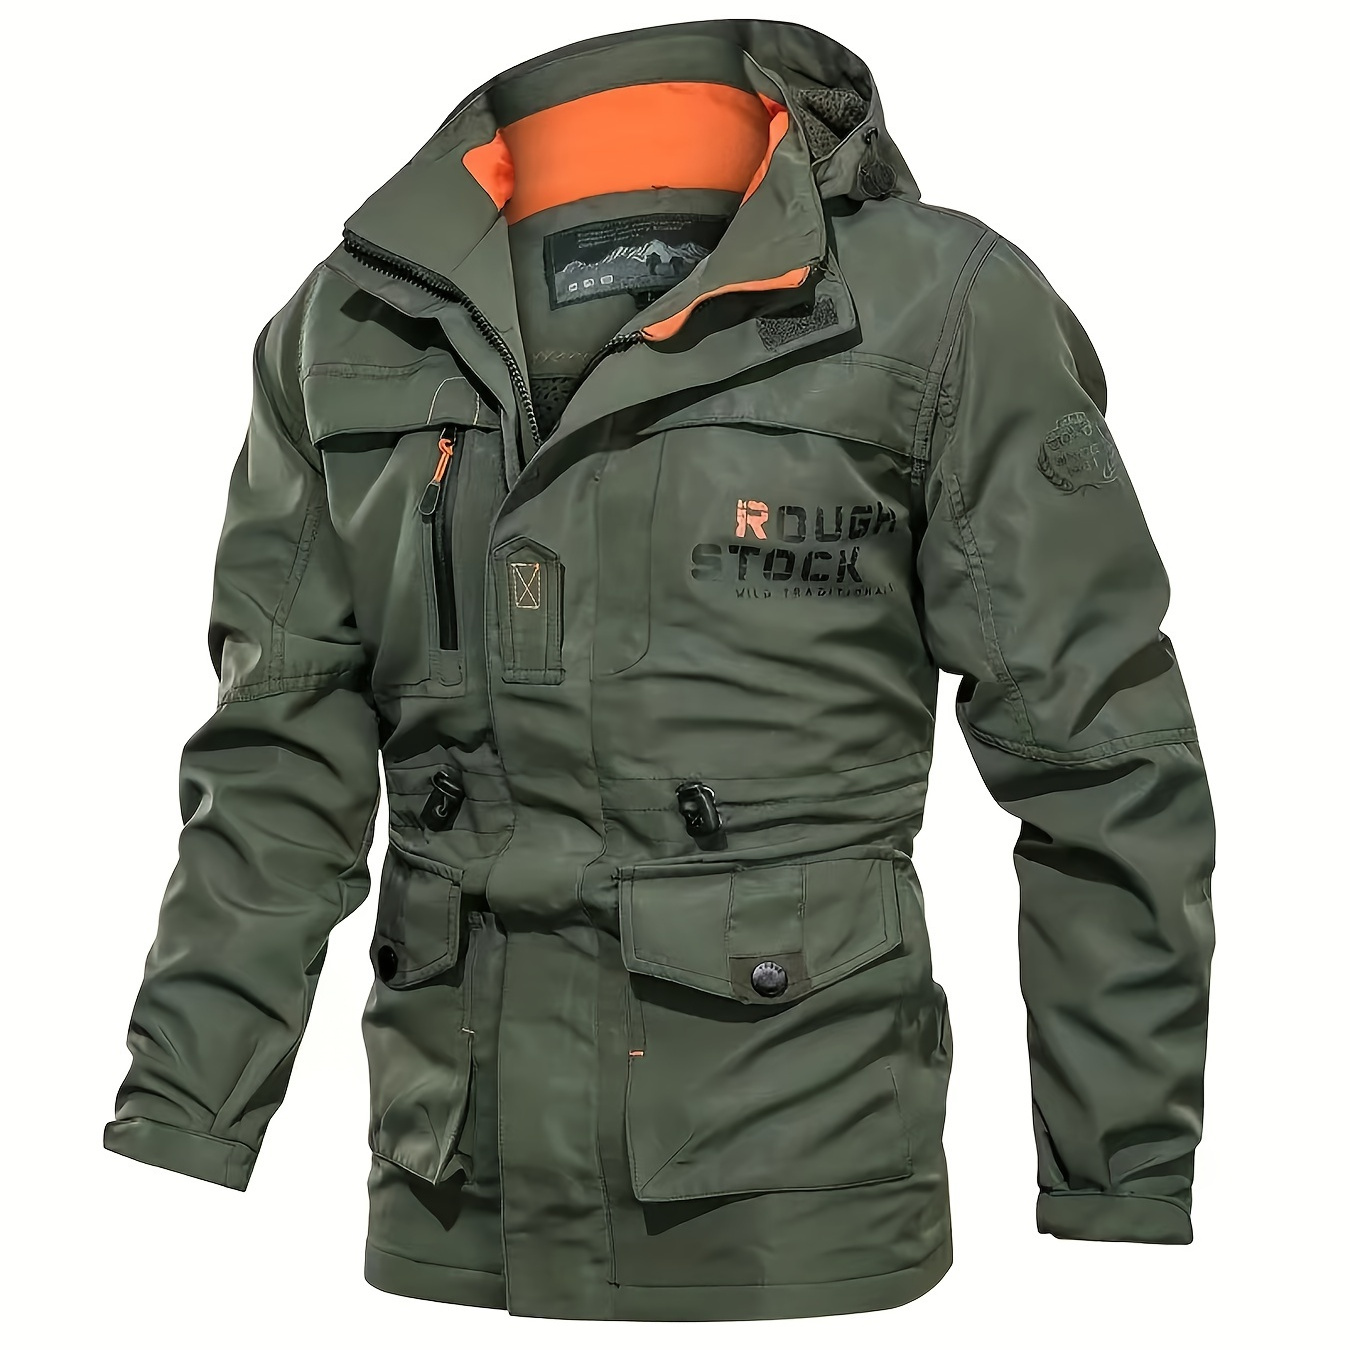 

Men's Outdoor Sports Jacket, Detachable Hood Climbing Coat, Travel Windbreaker, Casual Hiking Outerwear, Athletic Style